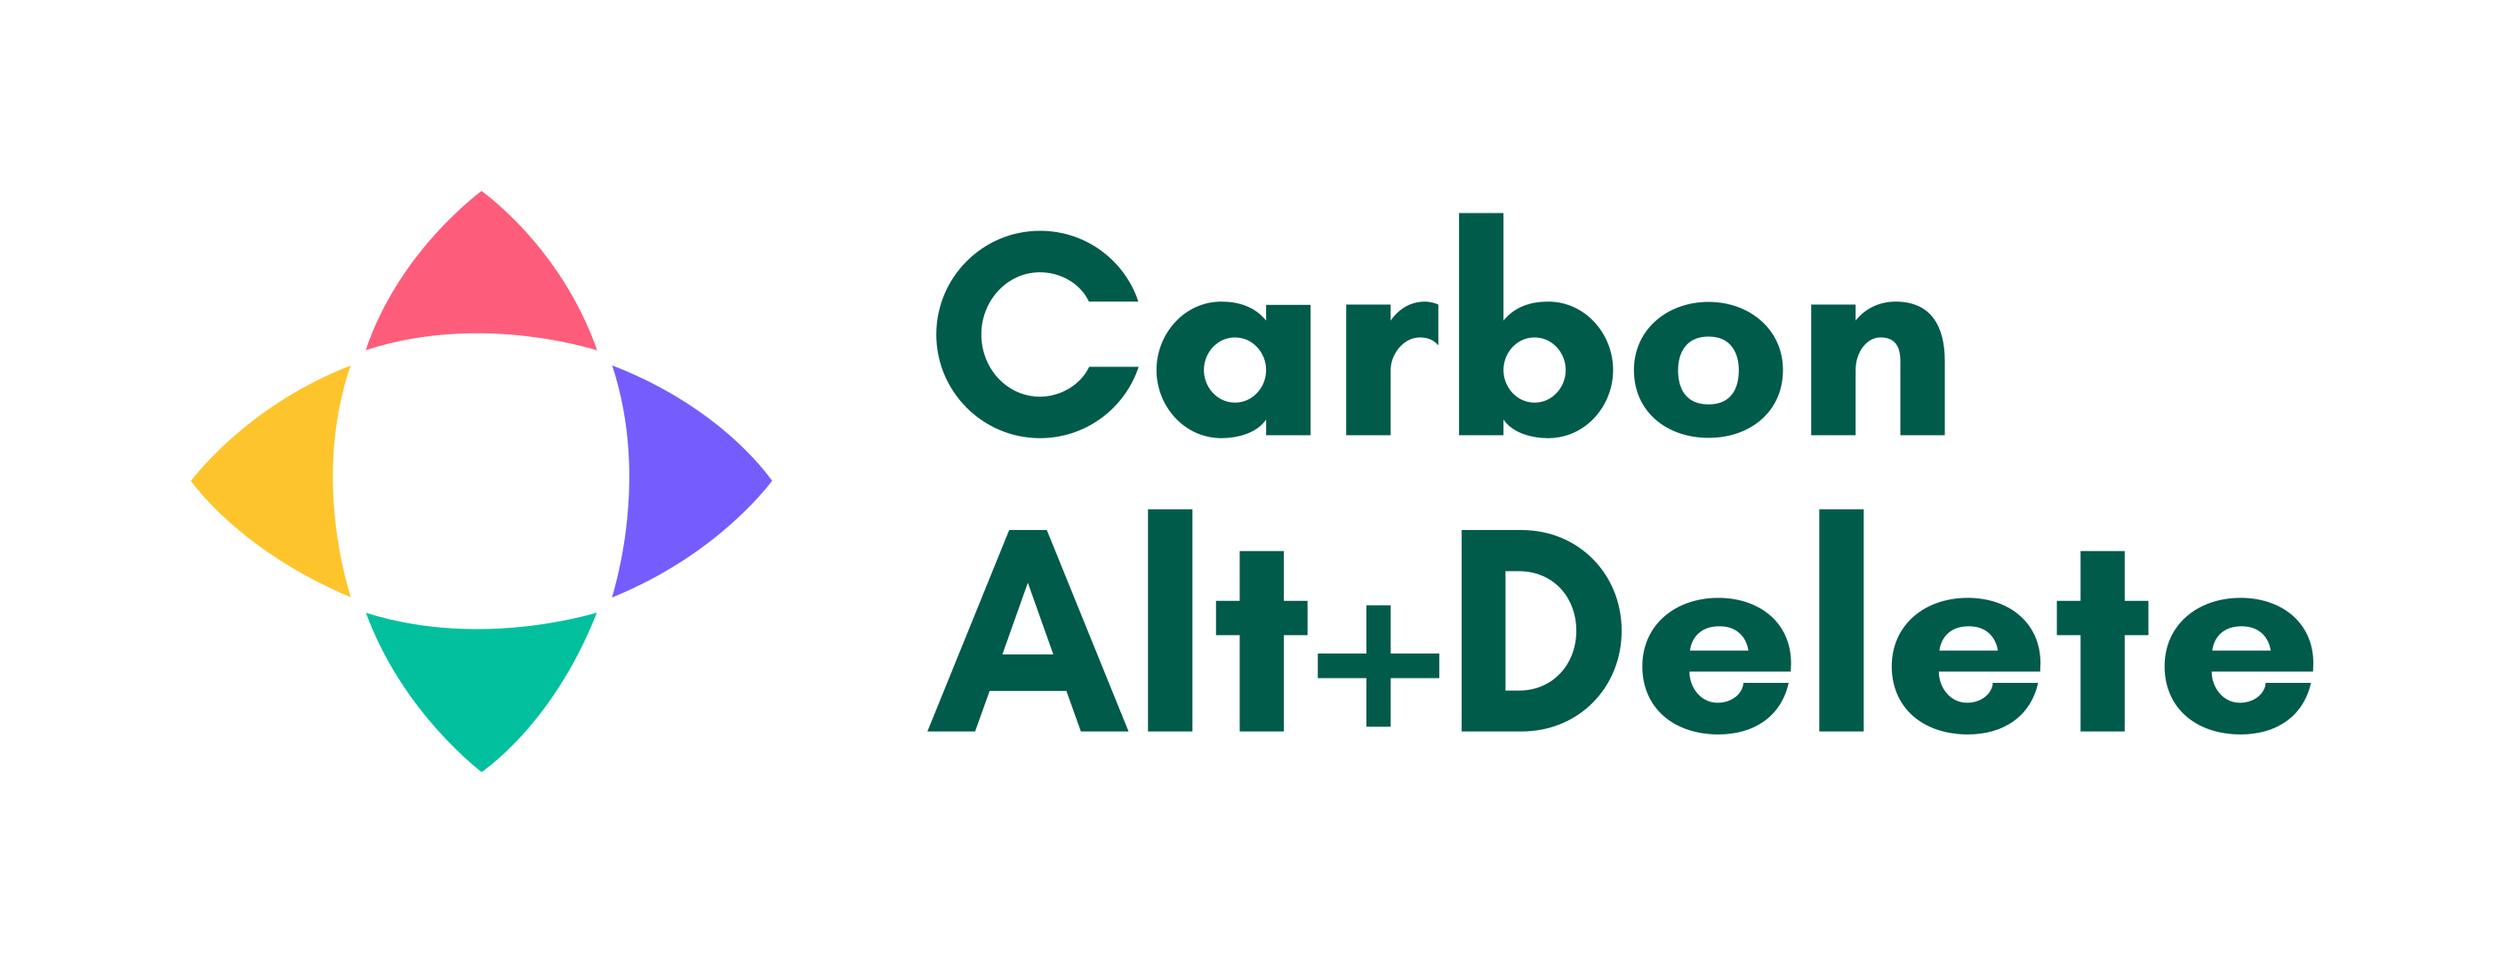 Carbon Alt Delete Logo.png